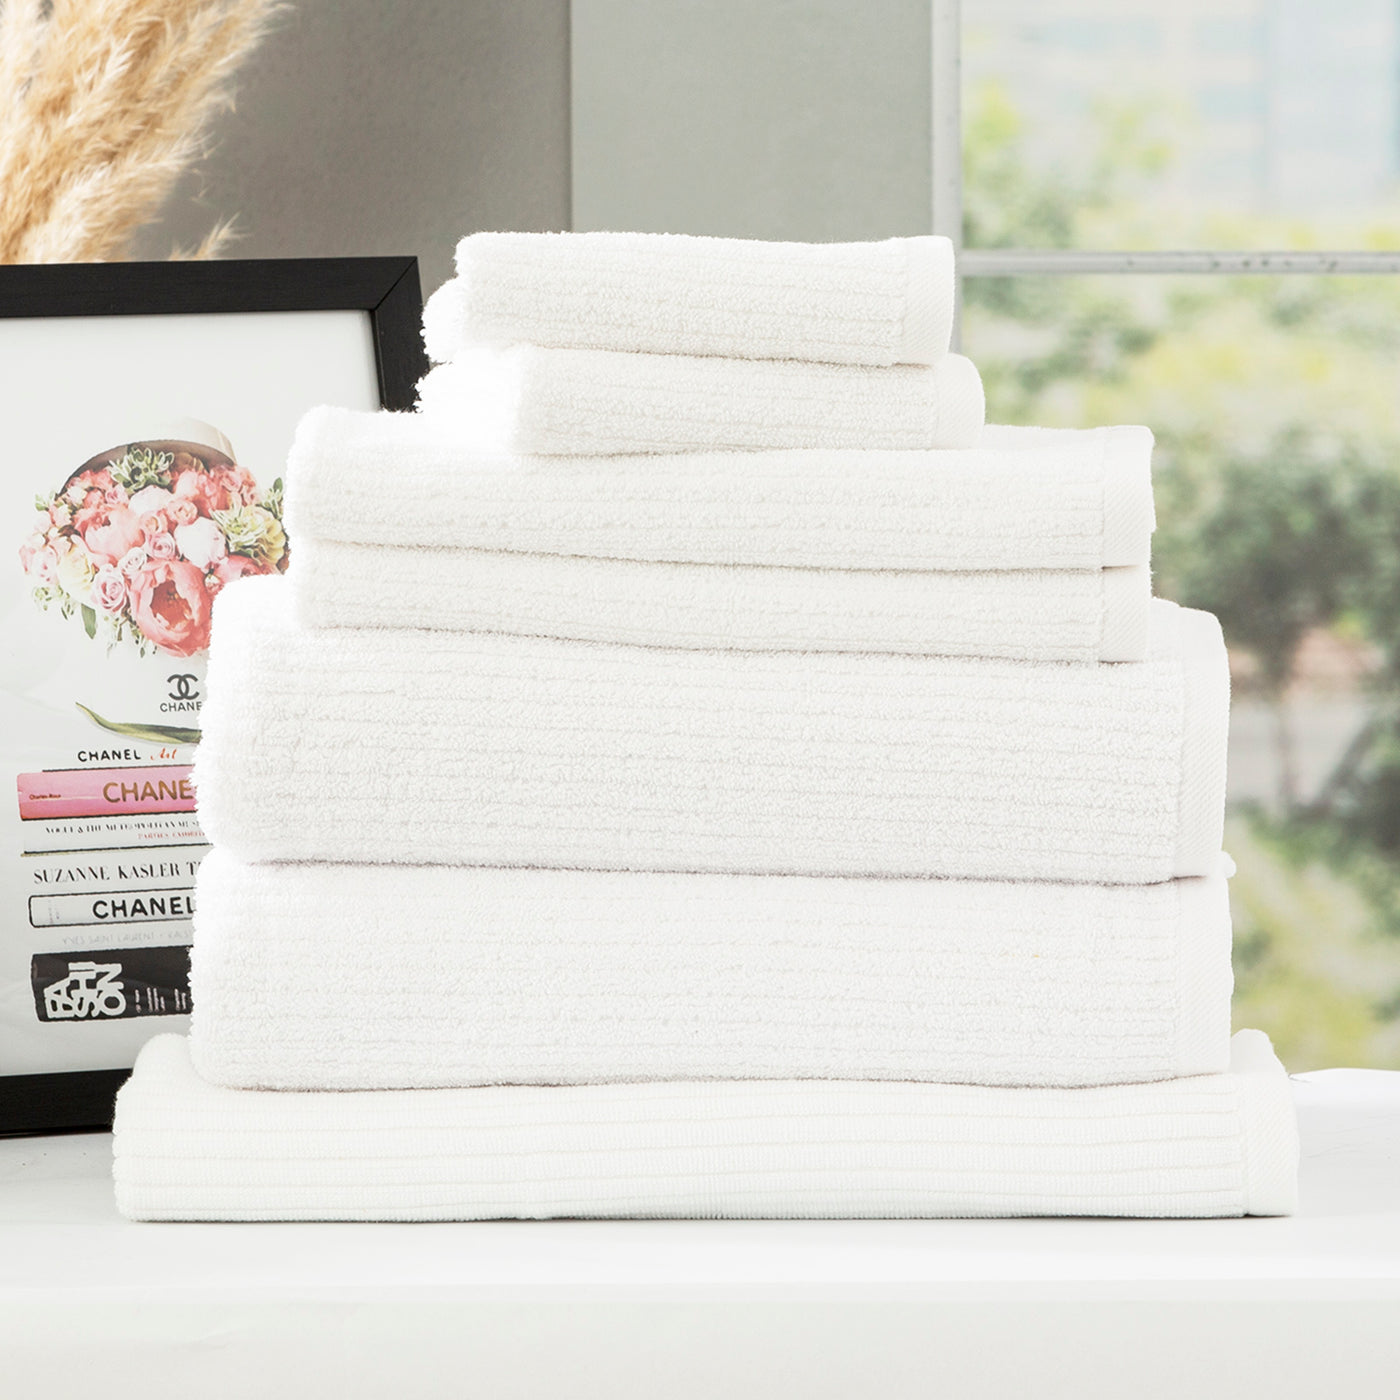 Quick Dry Cobblestone 650 GSM Soft Zero Twist Towel Set White snow quick dry bath towels-pink bath towels-best bath towels australia-bath towels-bath towels on sale-luxury bath towels-colourful bath towels- bath towel sets-bath towel set-afterpay-free shipping-free post-australia- new Zealand.